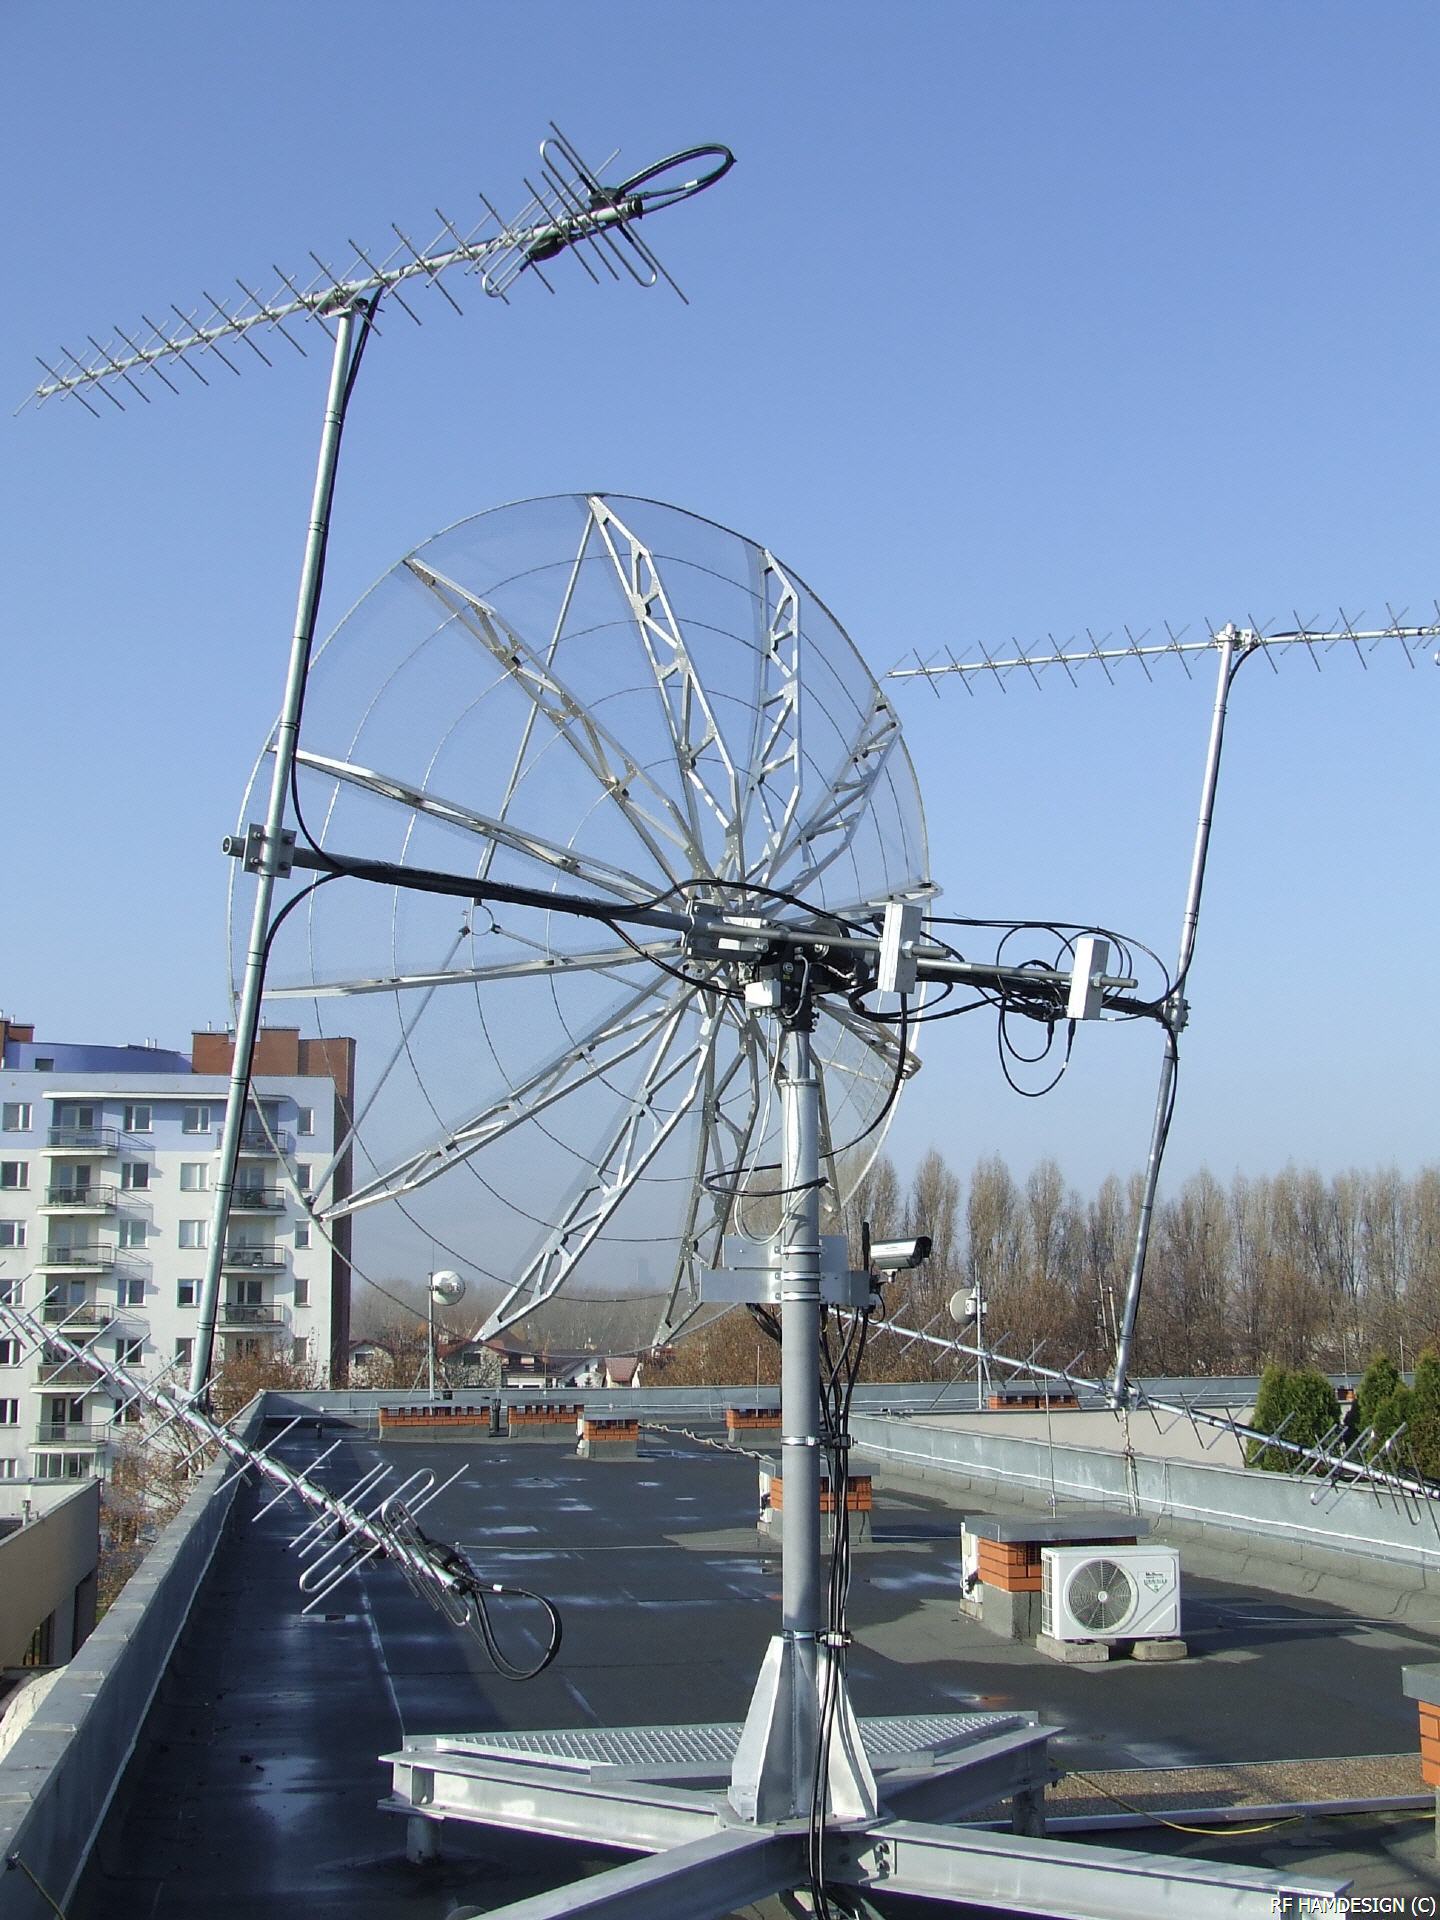 Hamburger Antenne Antenna Sandvoss & Co., Hamburg-Wandsbeck, build